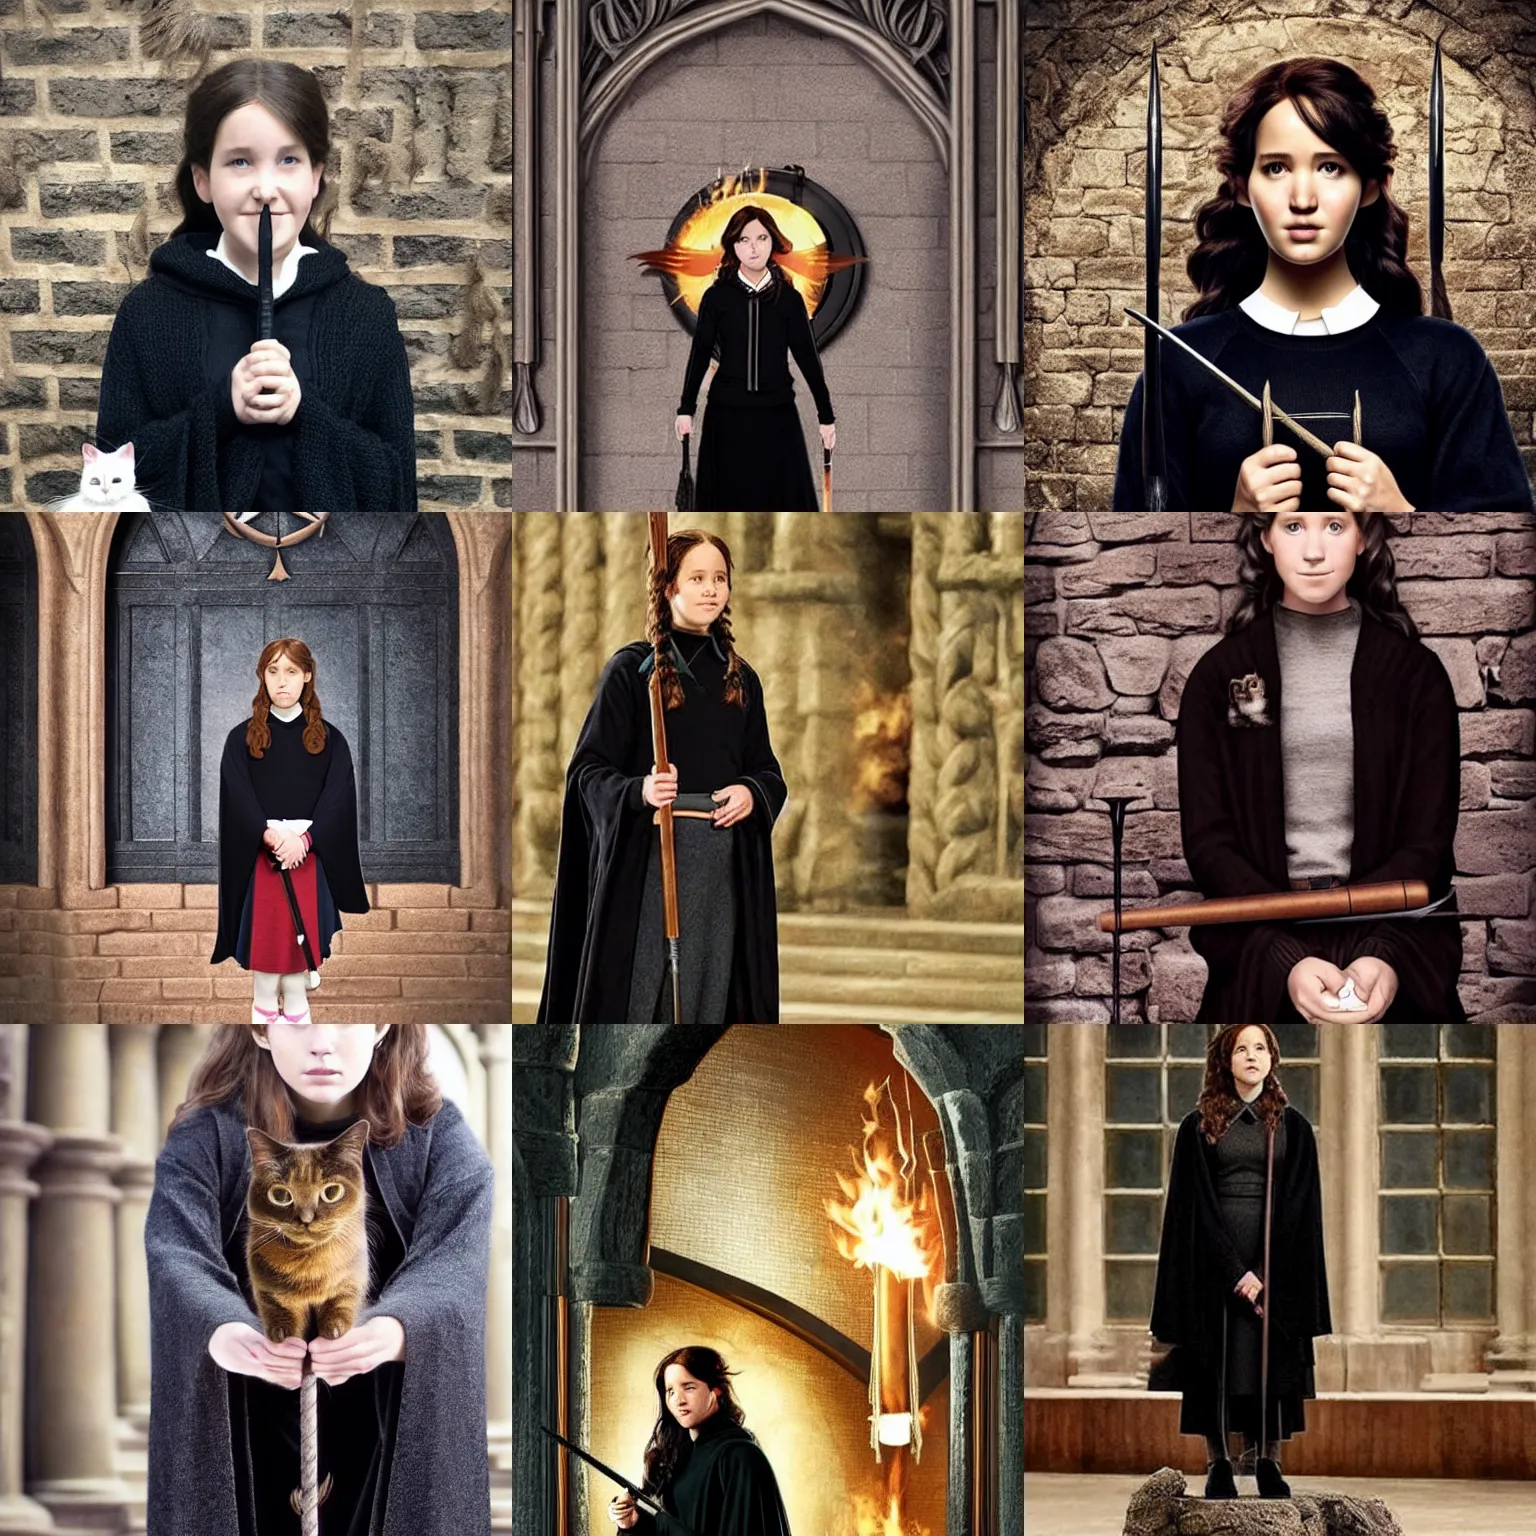 Prompt: ( ( ( ( ( katniss everdeen ) ) ) ) ) as a hermione granger, black wool sweater, cloak, skirt, holding wand, black cat at her feet, hogwarts great hall